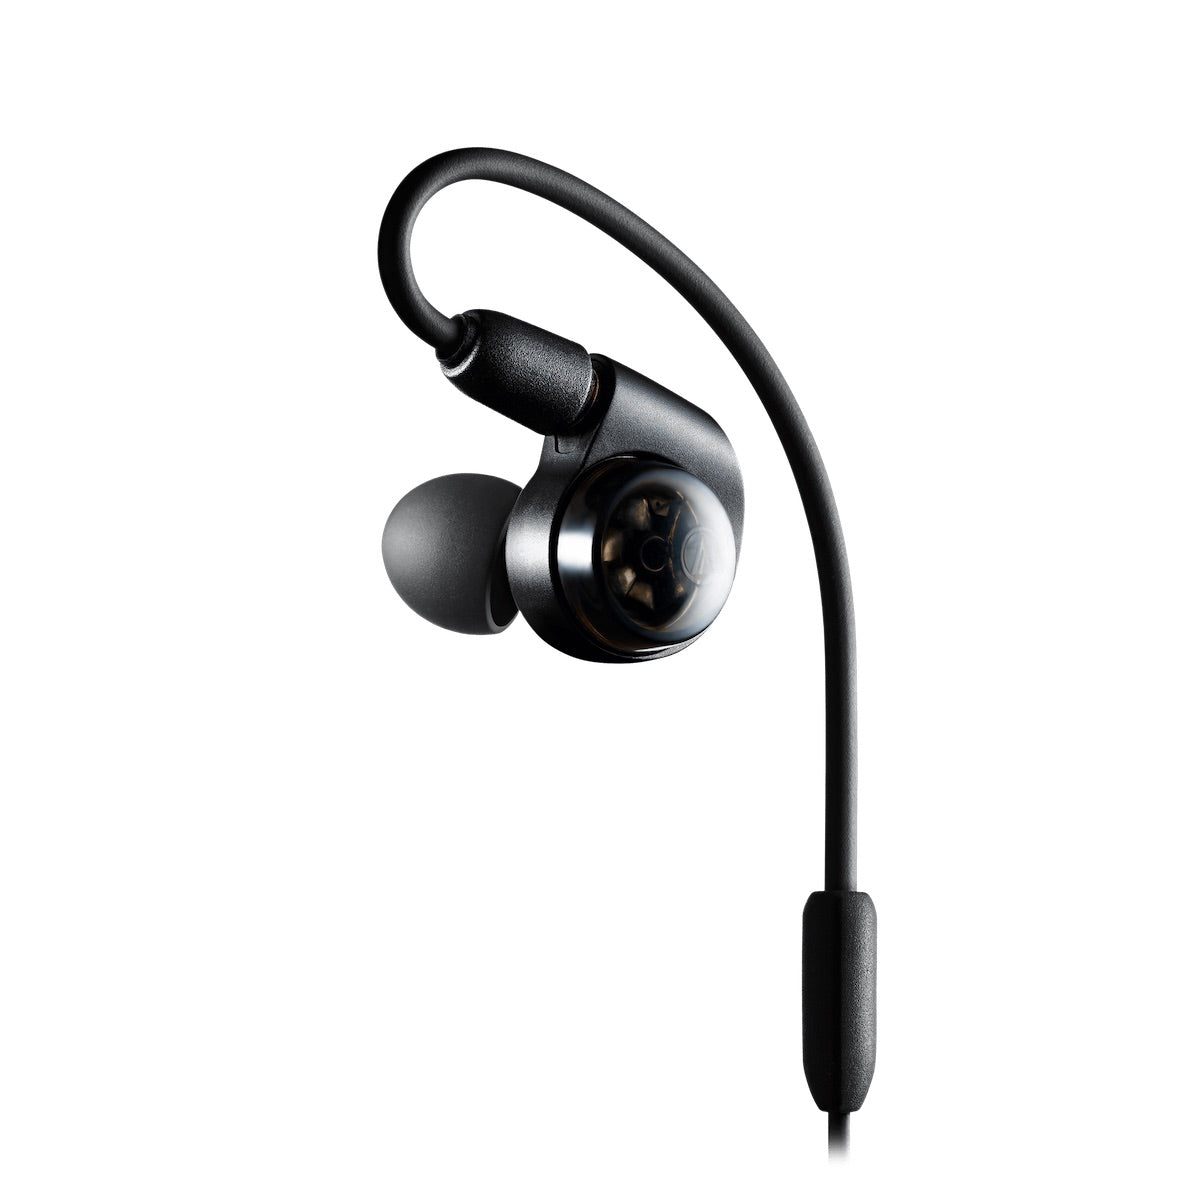 Audio-Technica ATH-E40 - Professional In-Ear Monitor Headphones, closeup